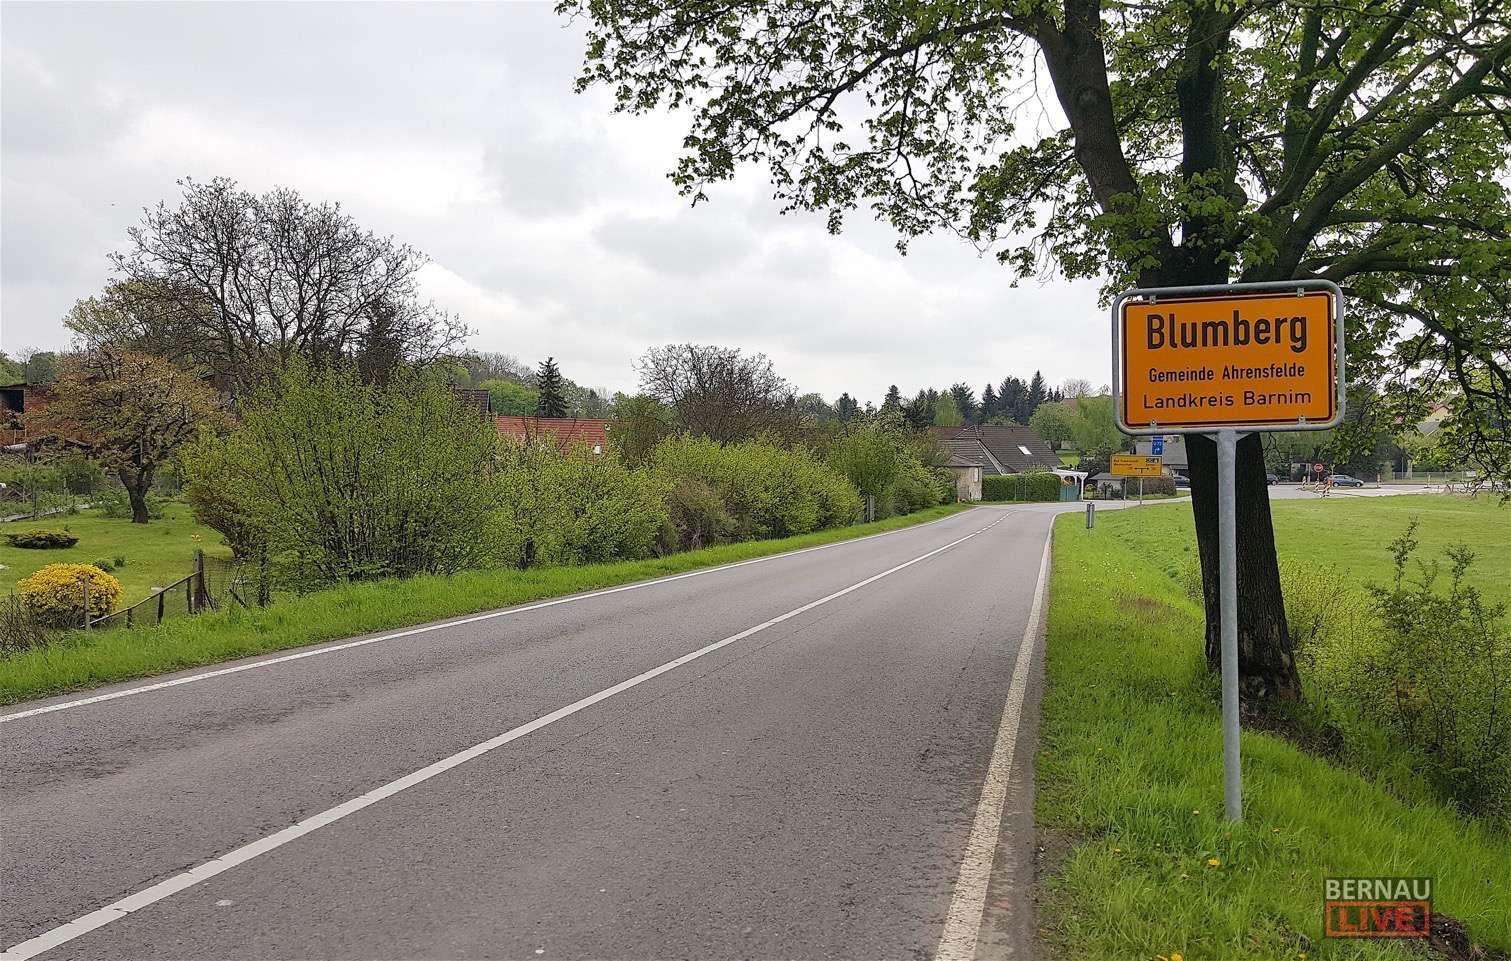 Kampfmittelsprengung in Blumberg - Sperrbereich am Montag